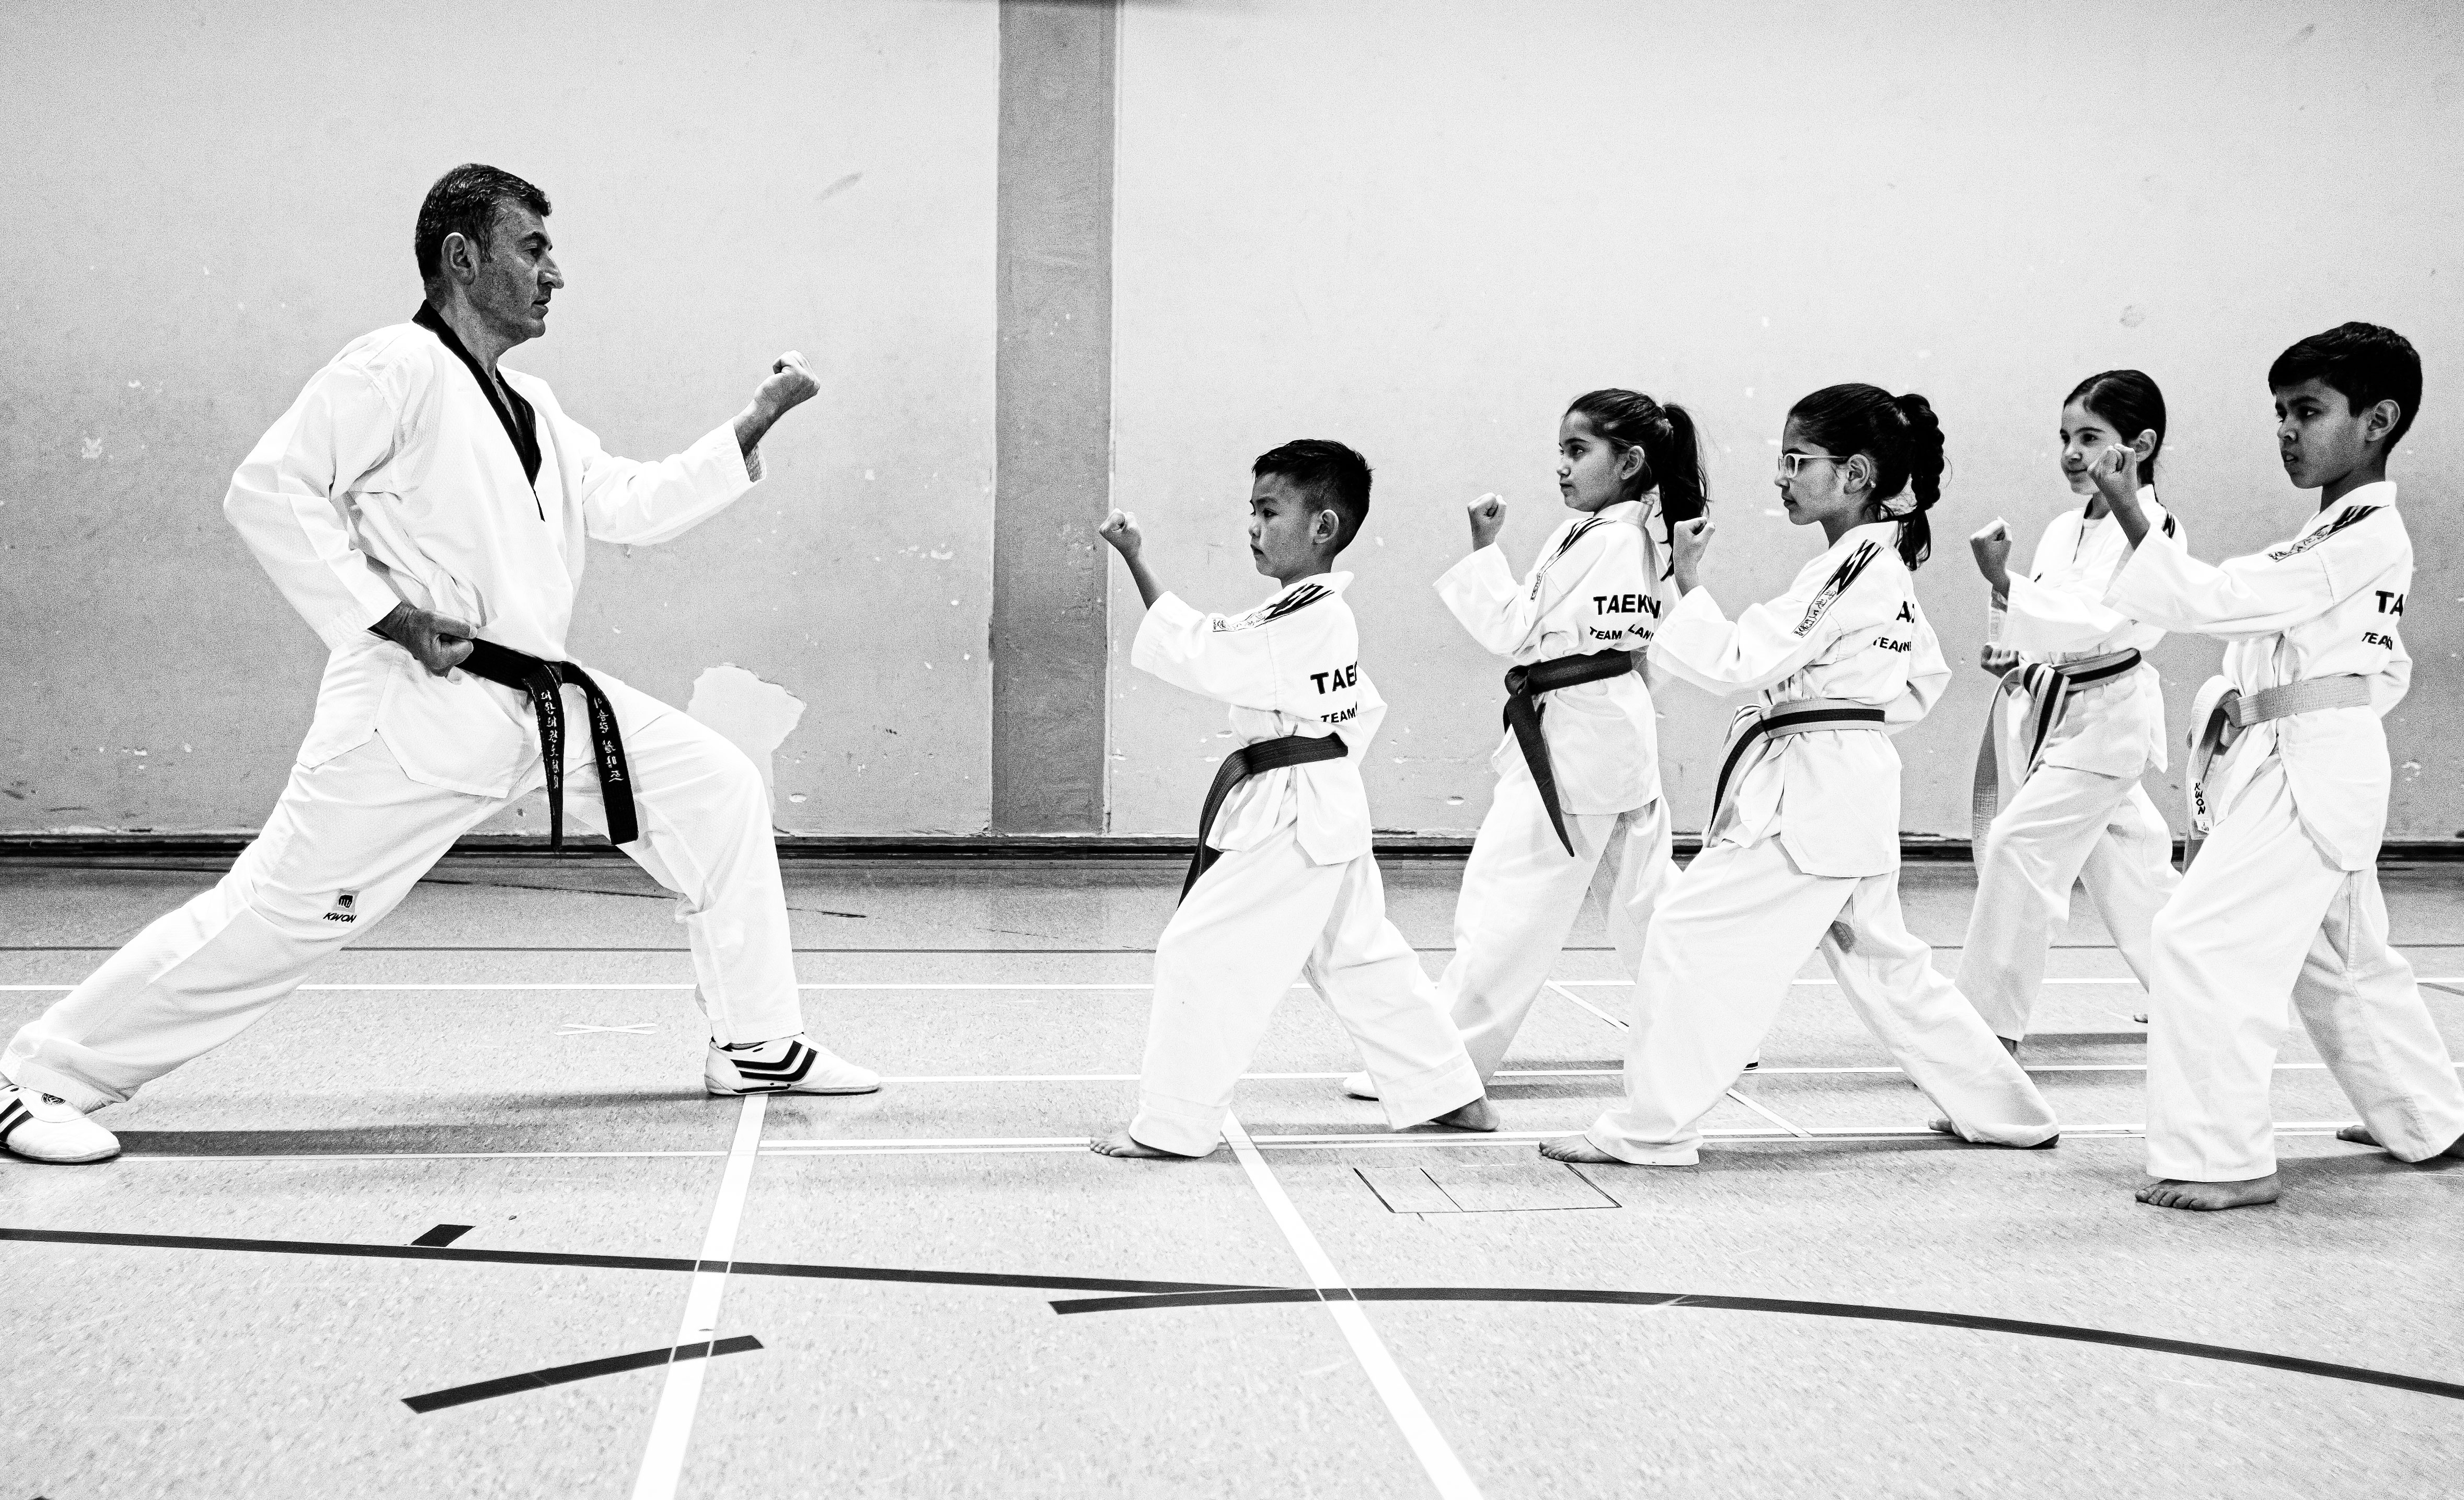 Aslan Taekwondo - Prinzipien